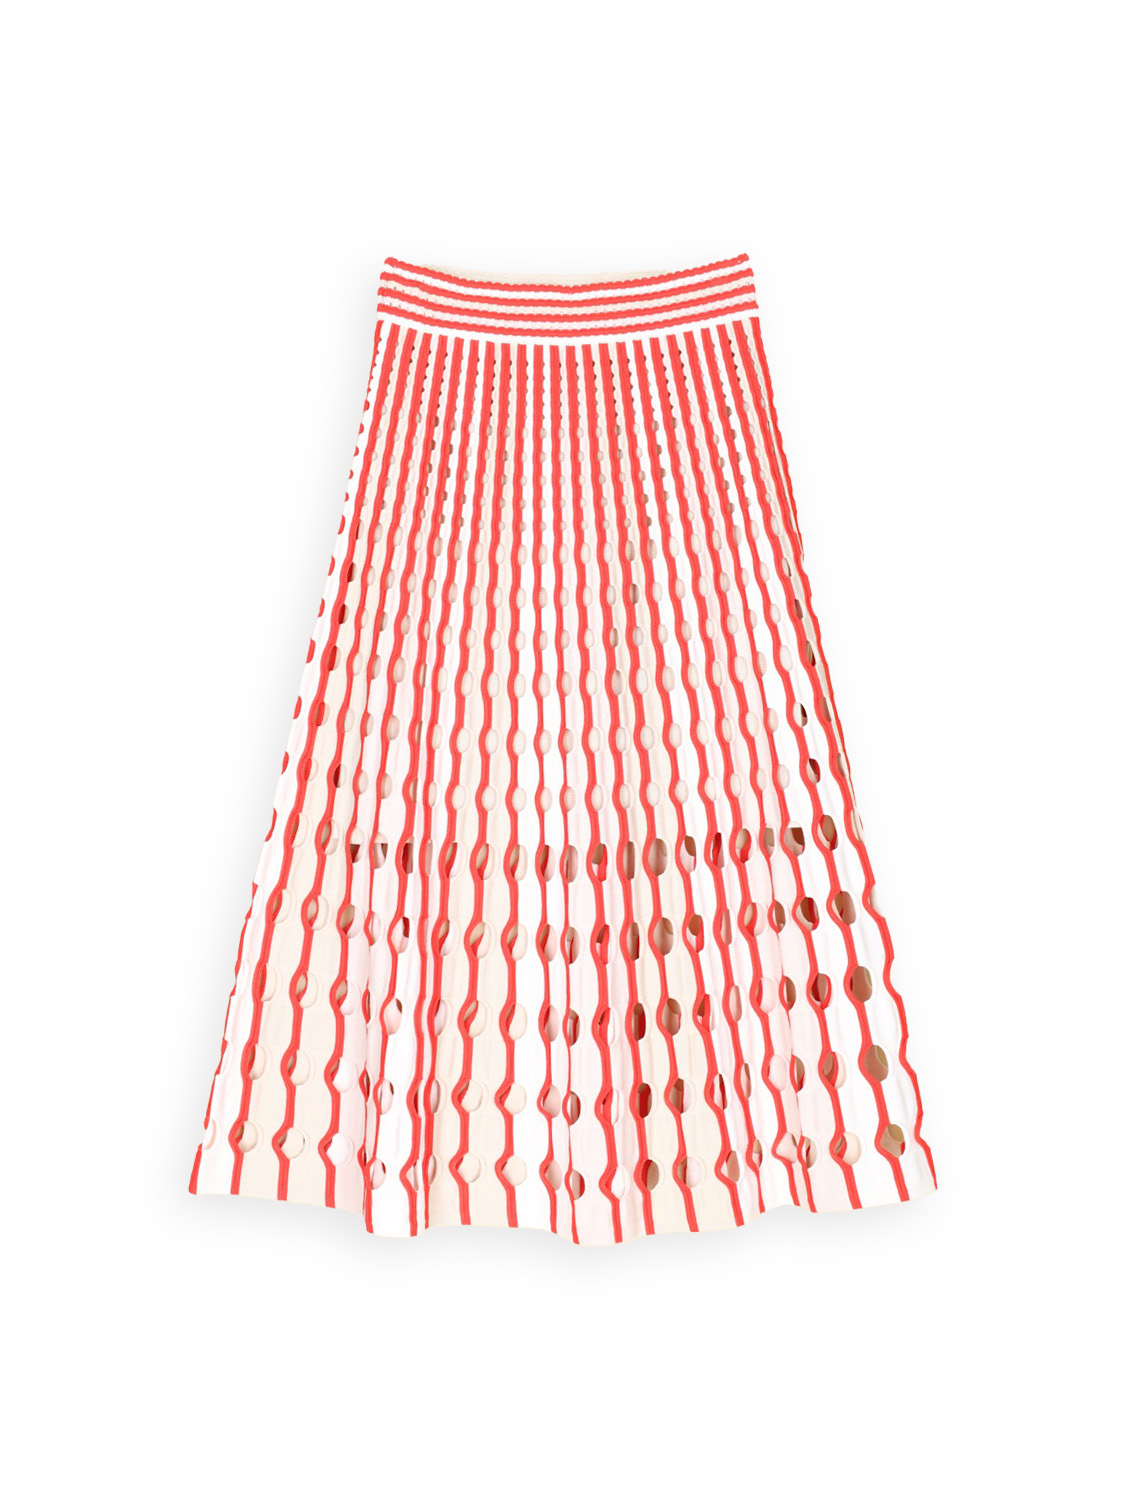 Jax – Skirt with hole pattern  